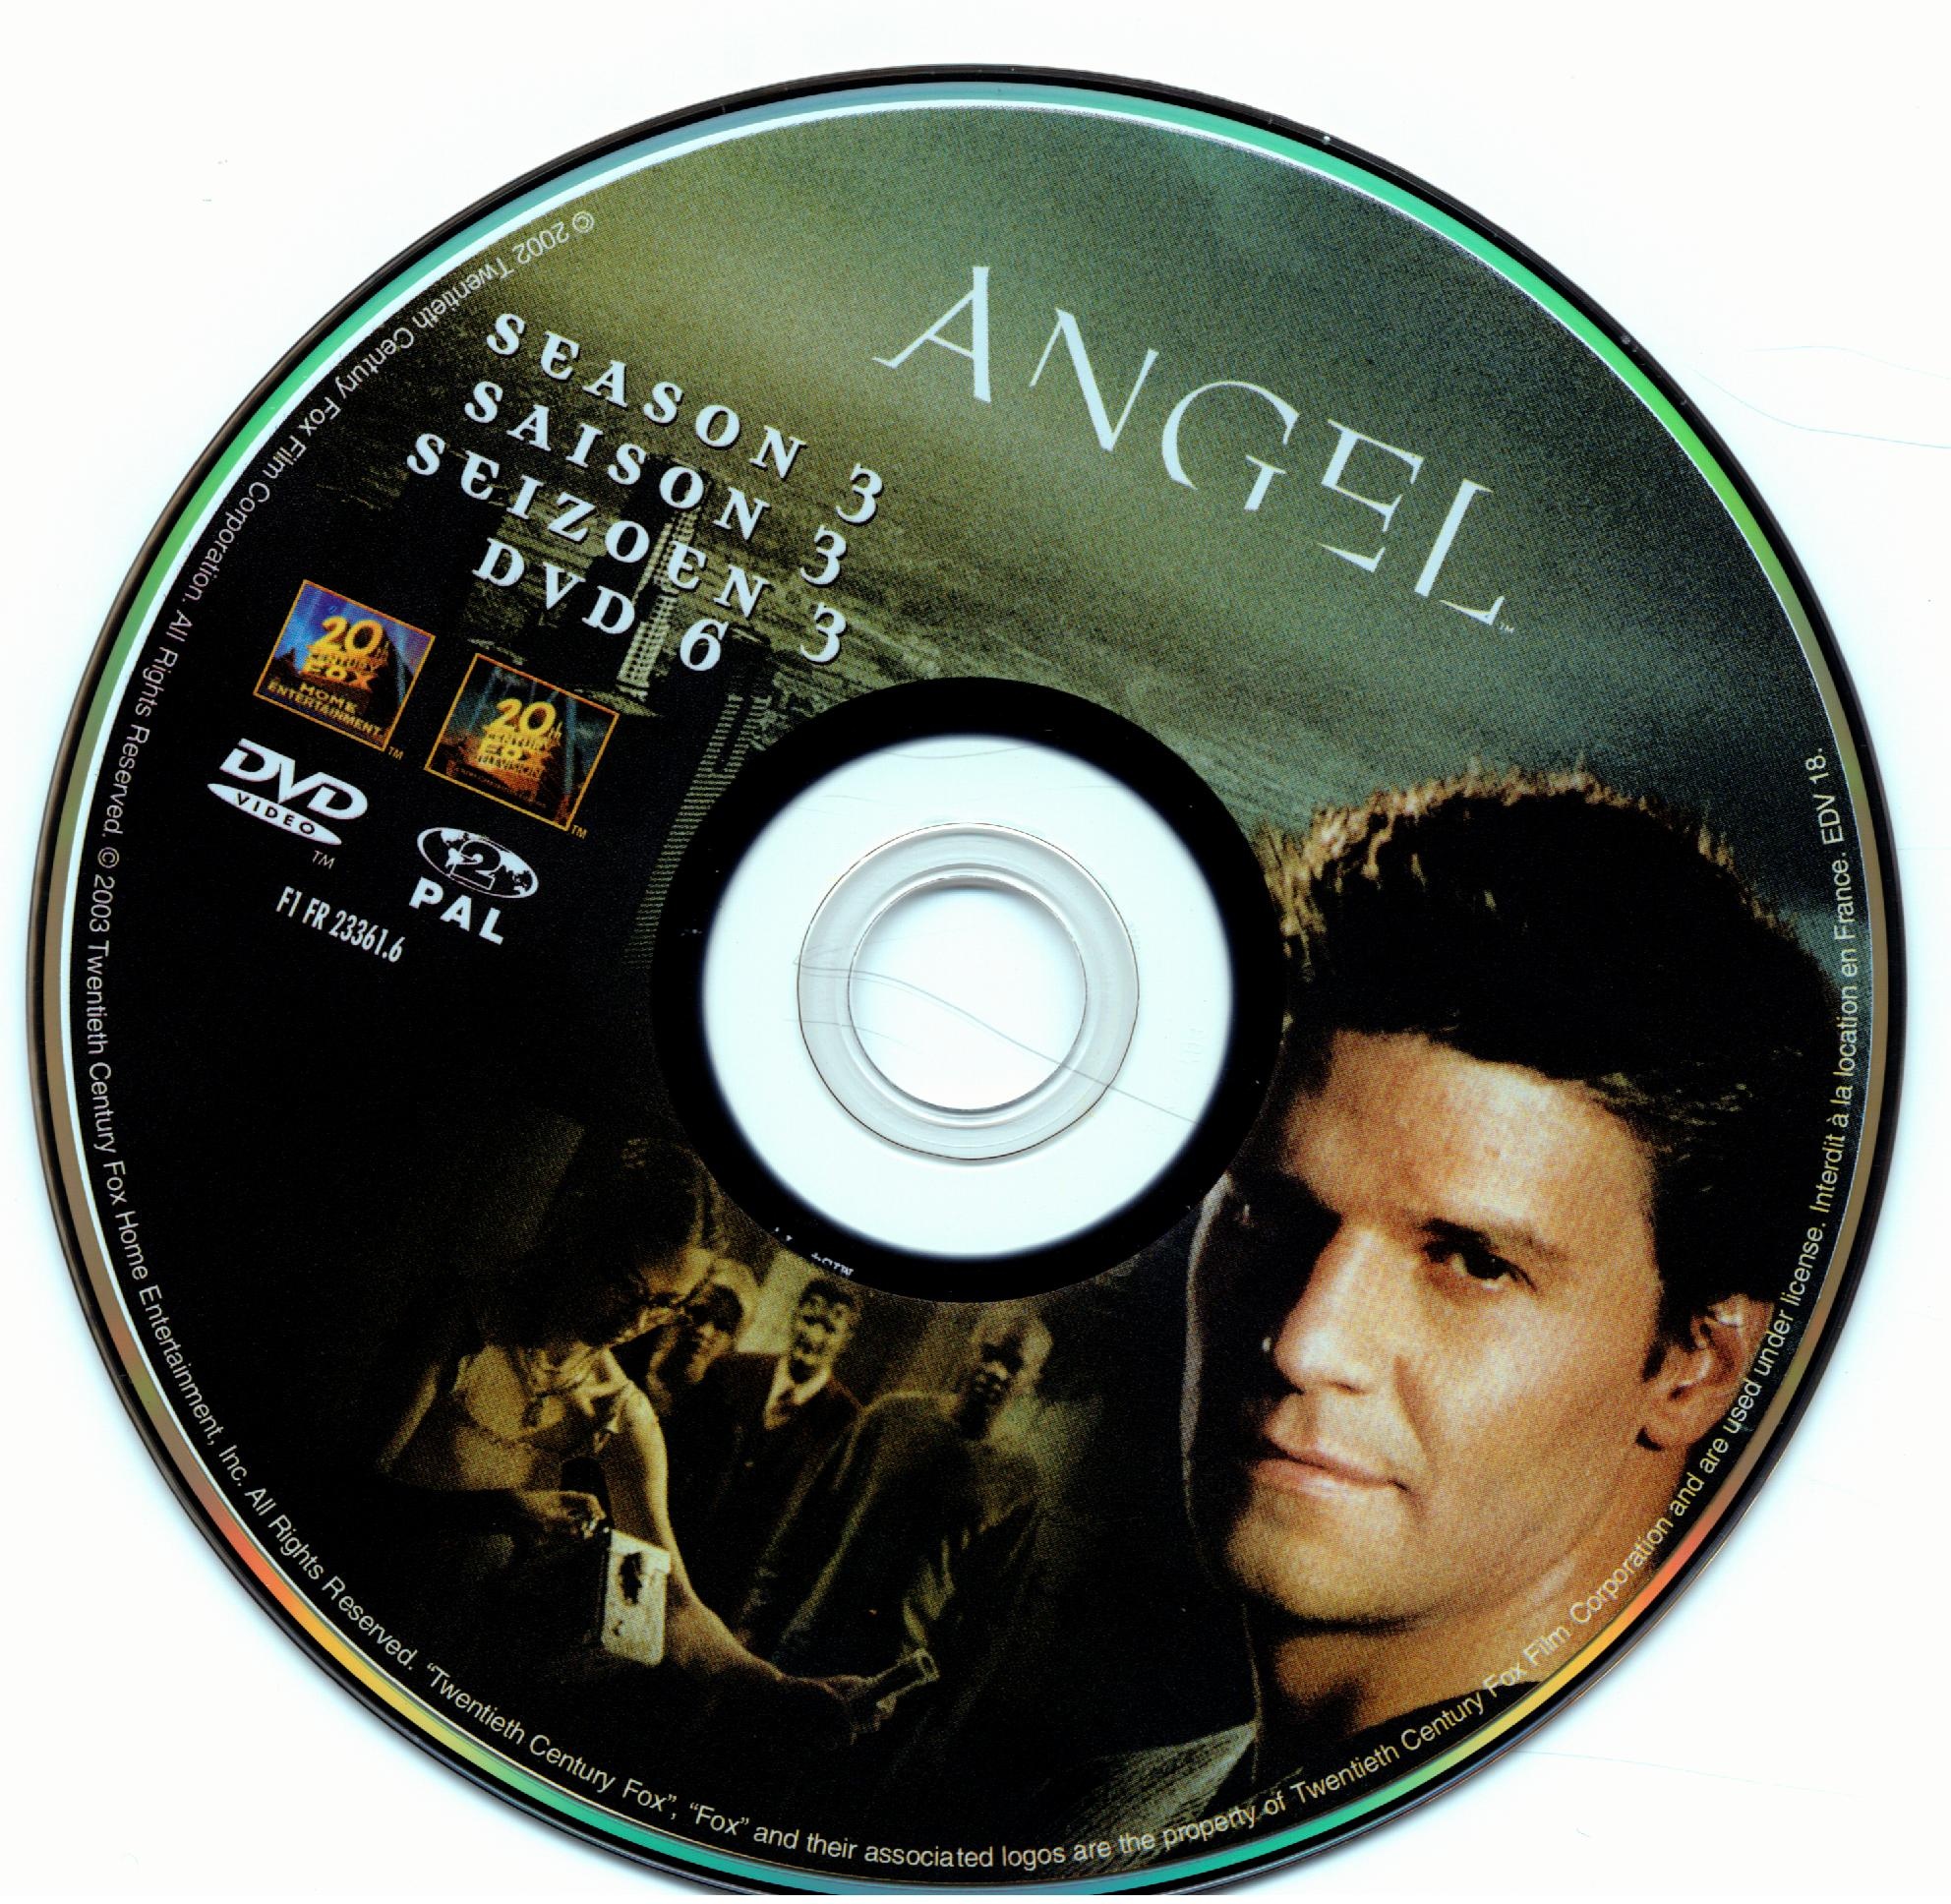 Angel Saison 3 dvd 6